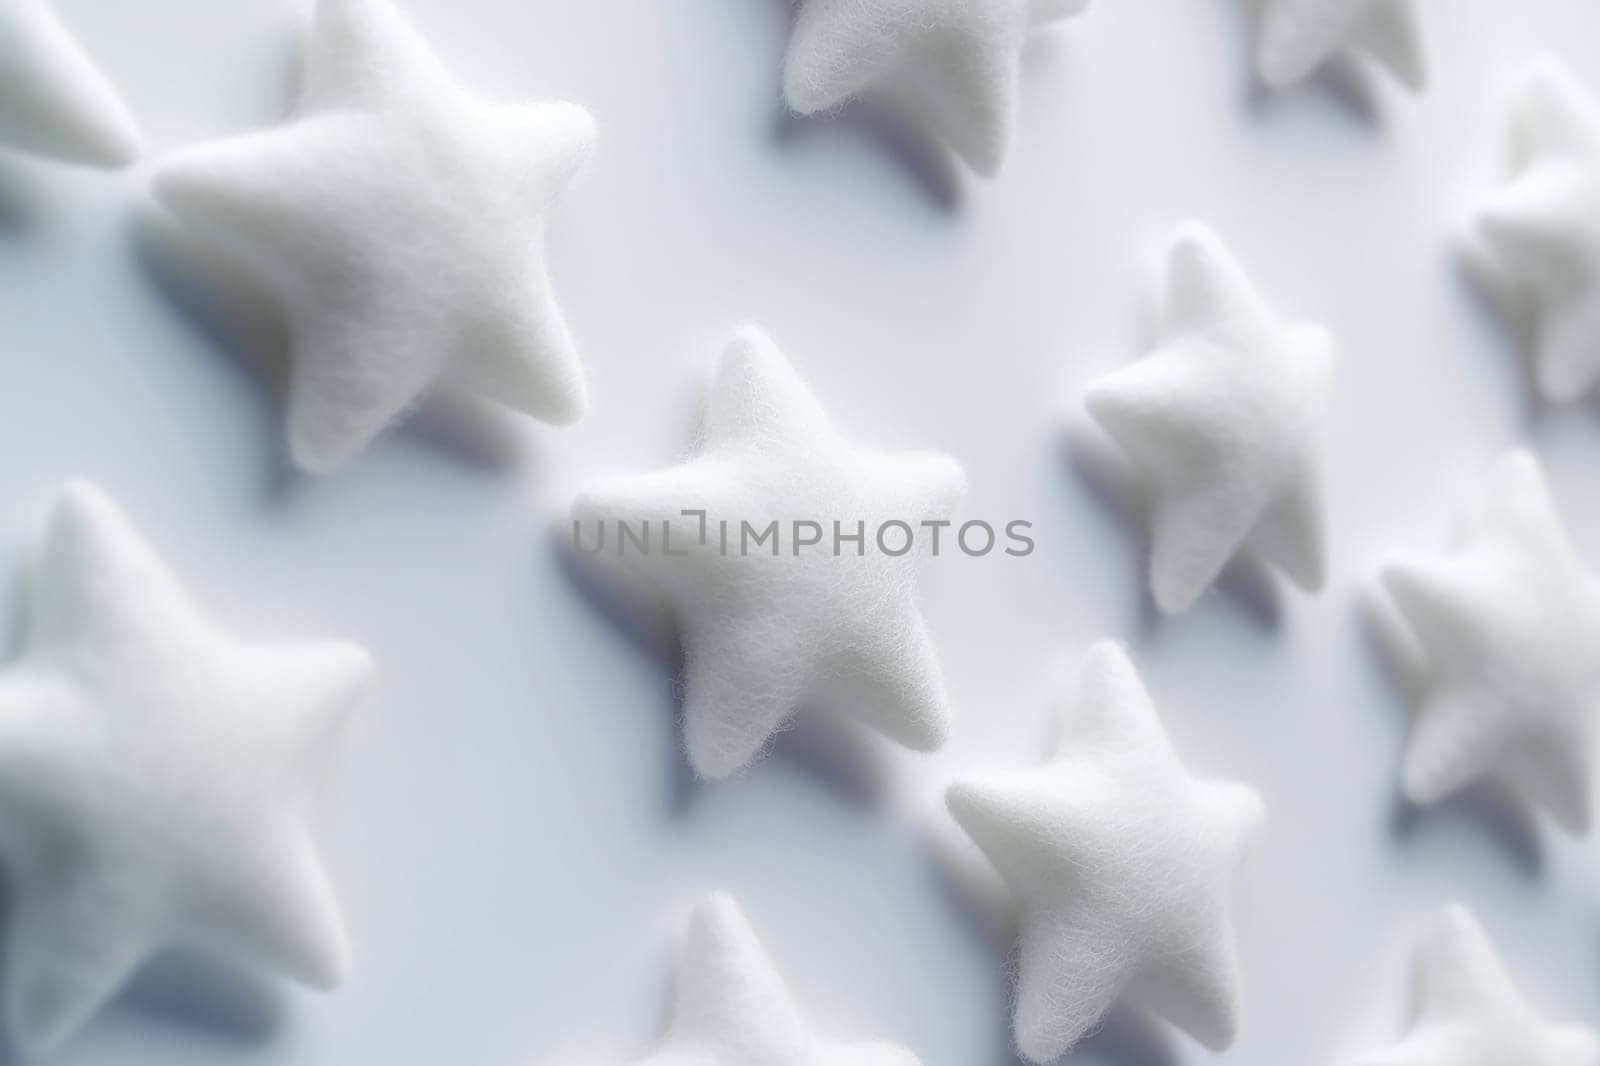 Uniform white star shapes arranged on a plain background